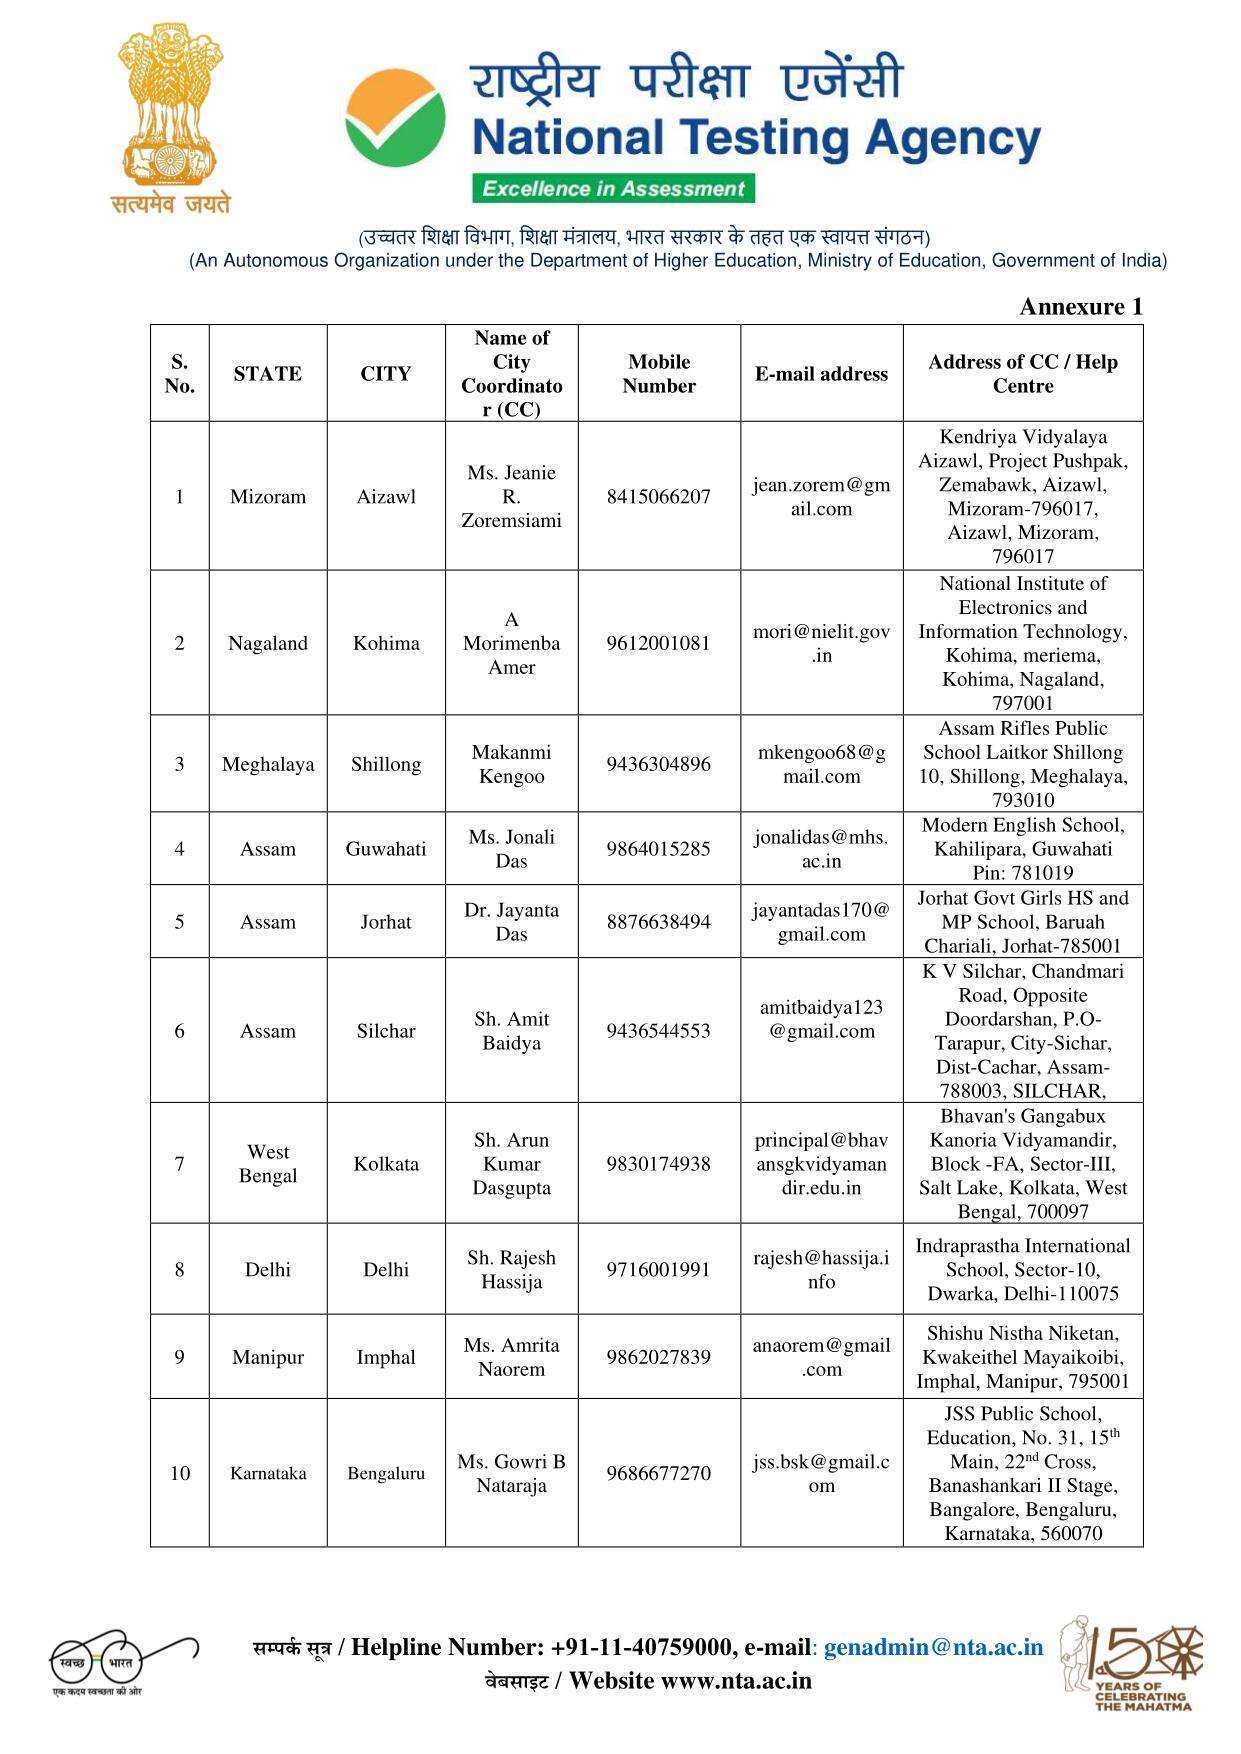 NEET Manipur update pdf-3